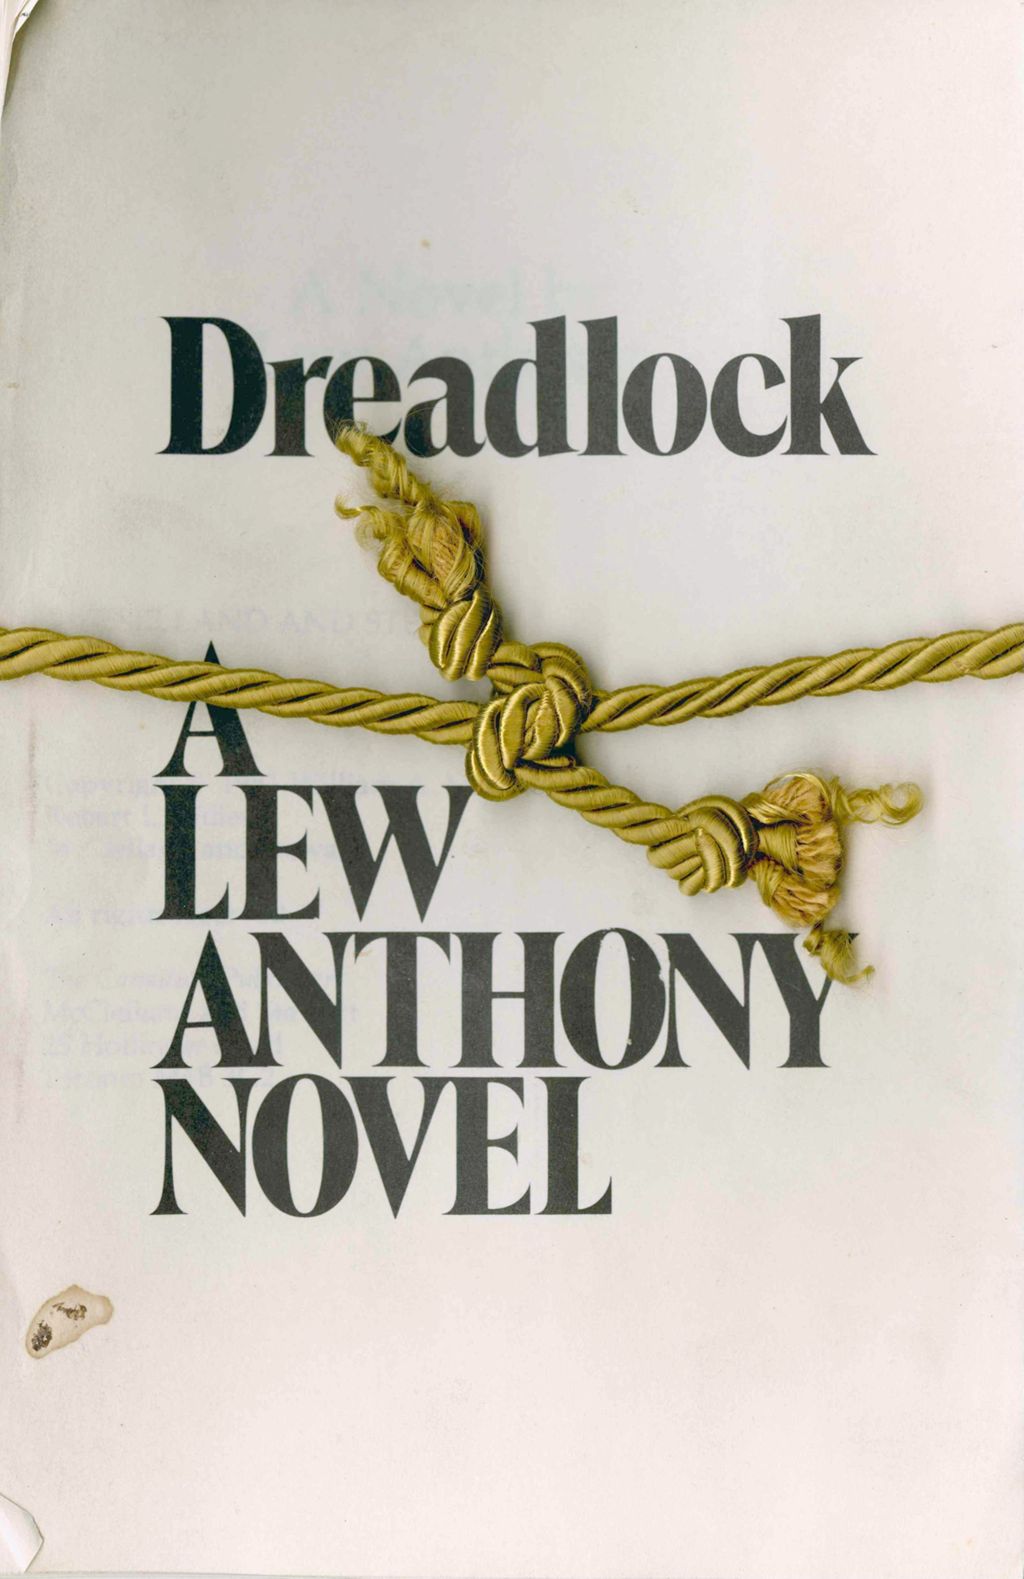 Dreadlock: a novel (unbound proof)